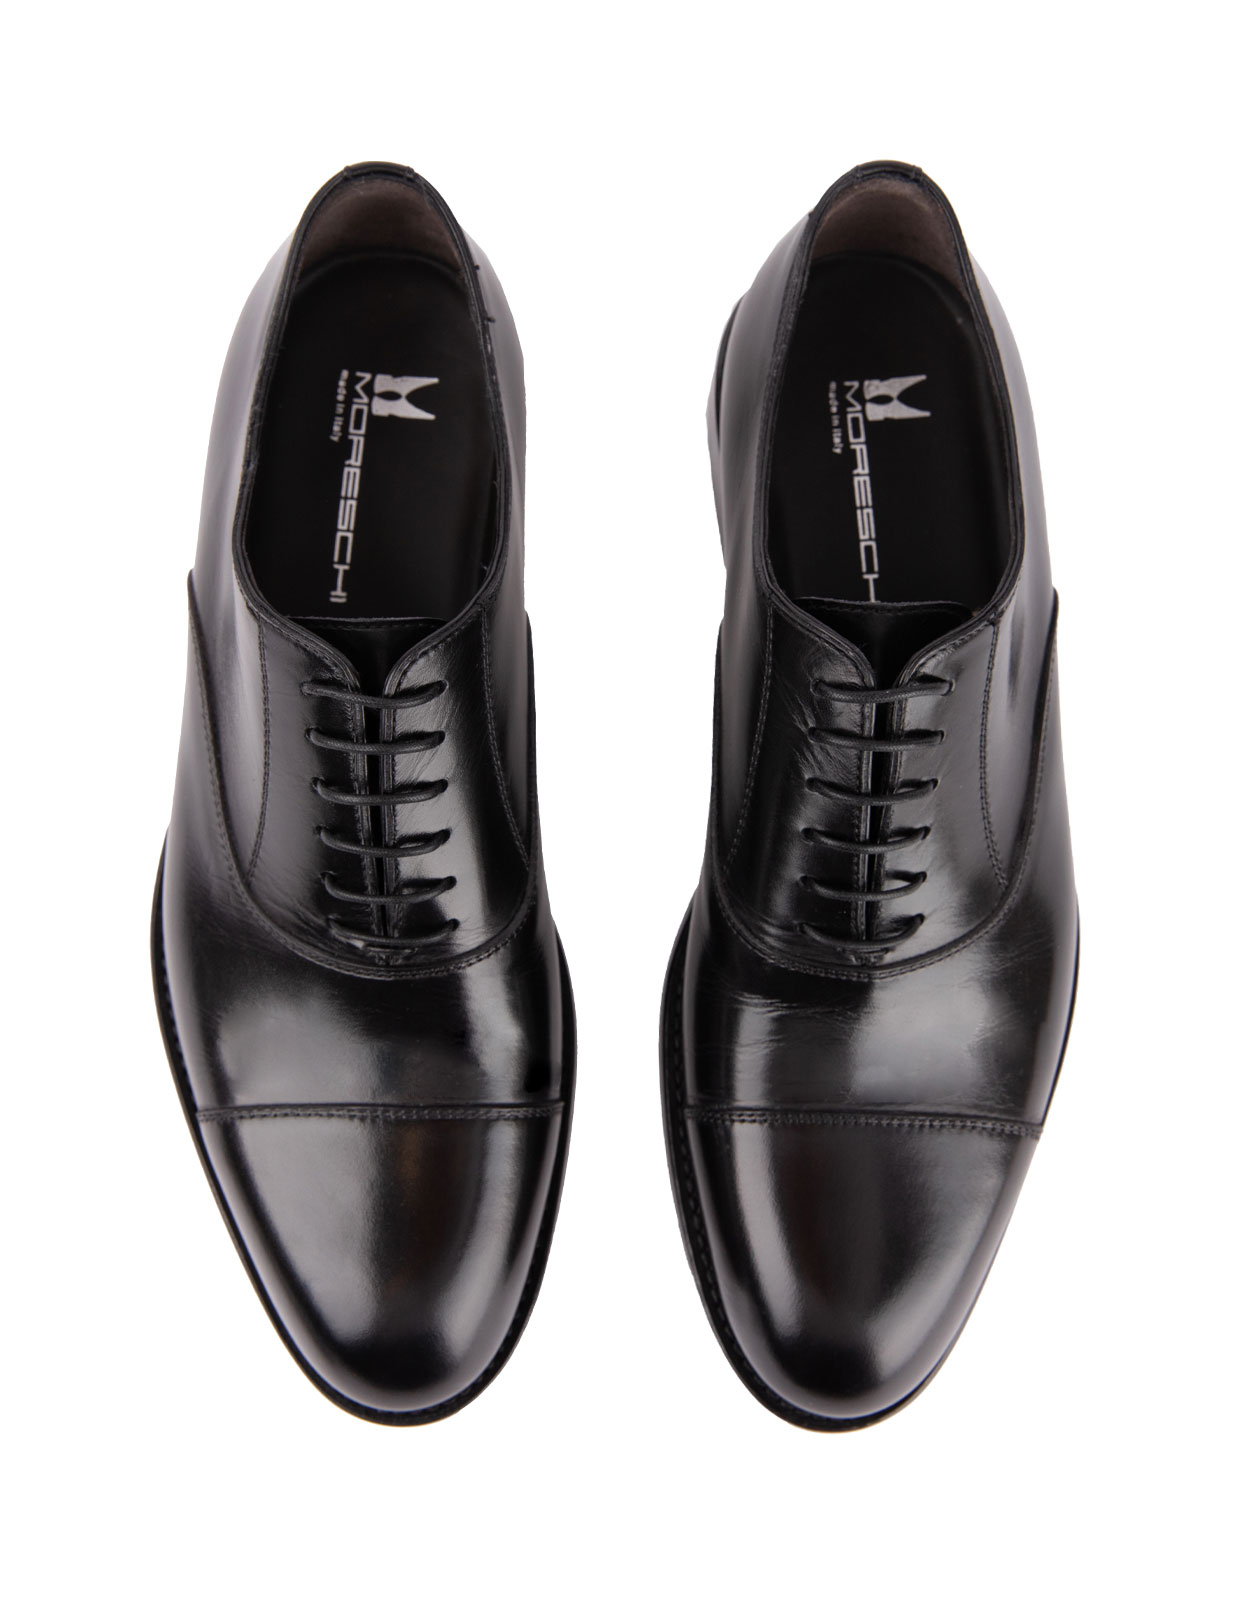 Cleveland Oxford Shoes Black Stl 11